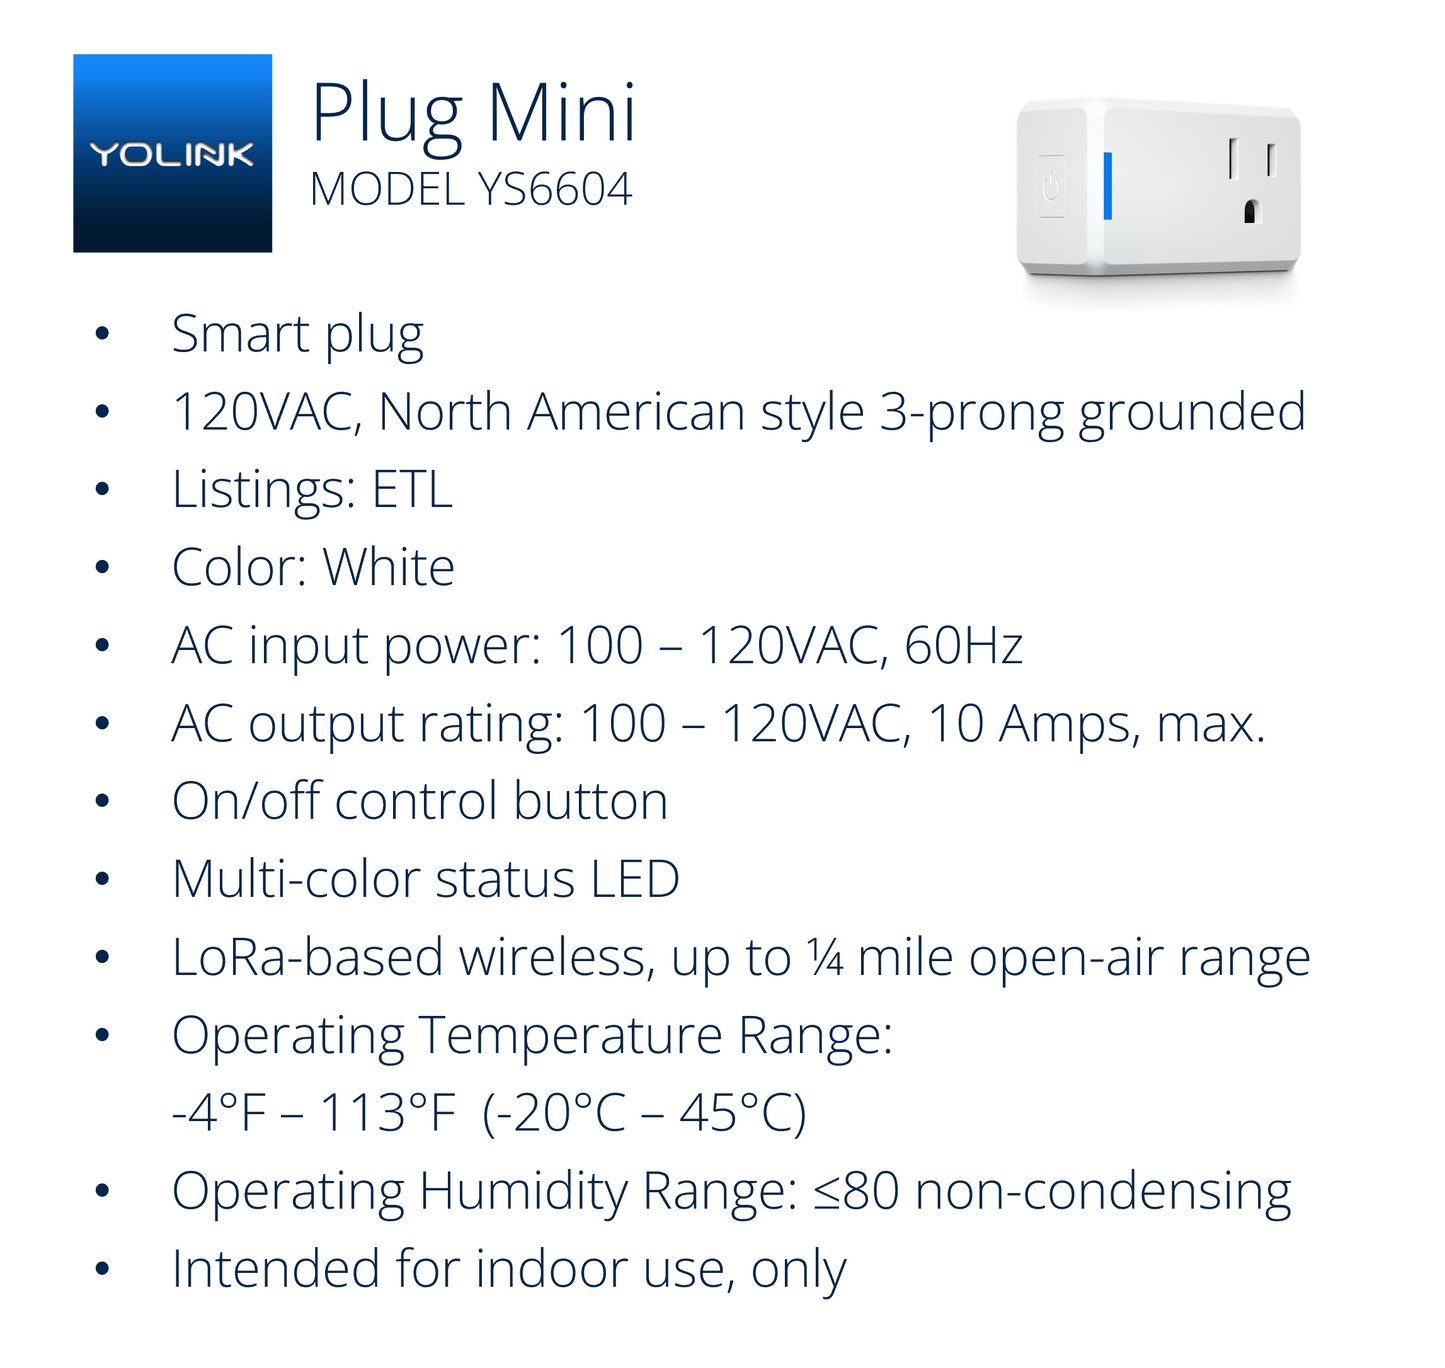 Yutron Mini Smart Power Plug WiFi Switch Alexa Google Voice Control –  Yutron Technology LTD.